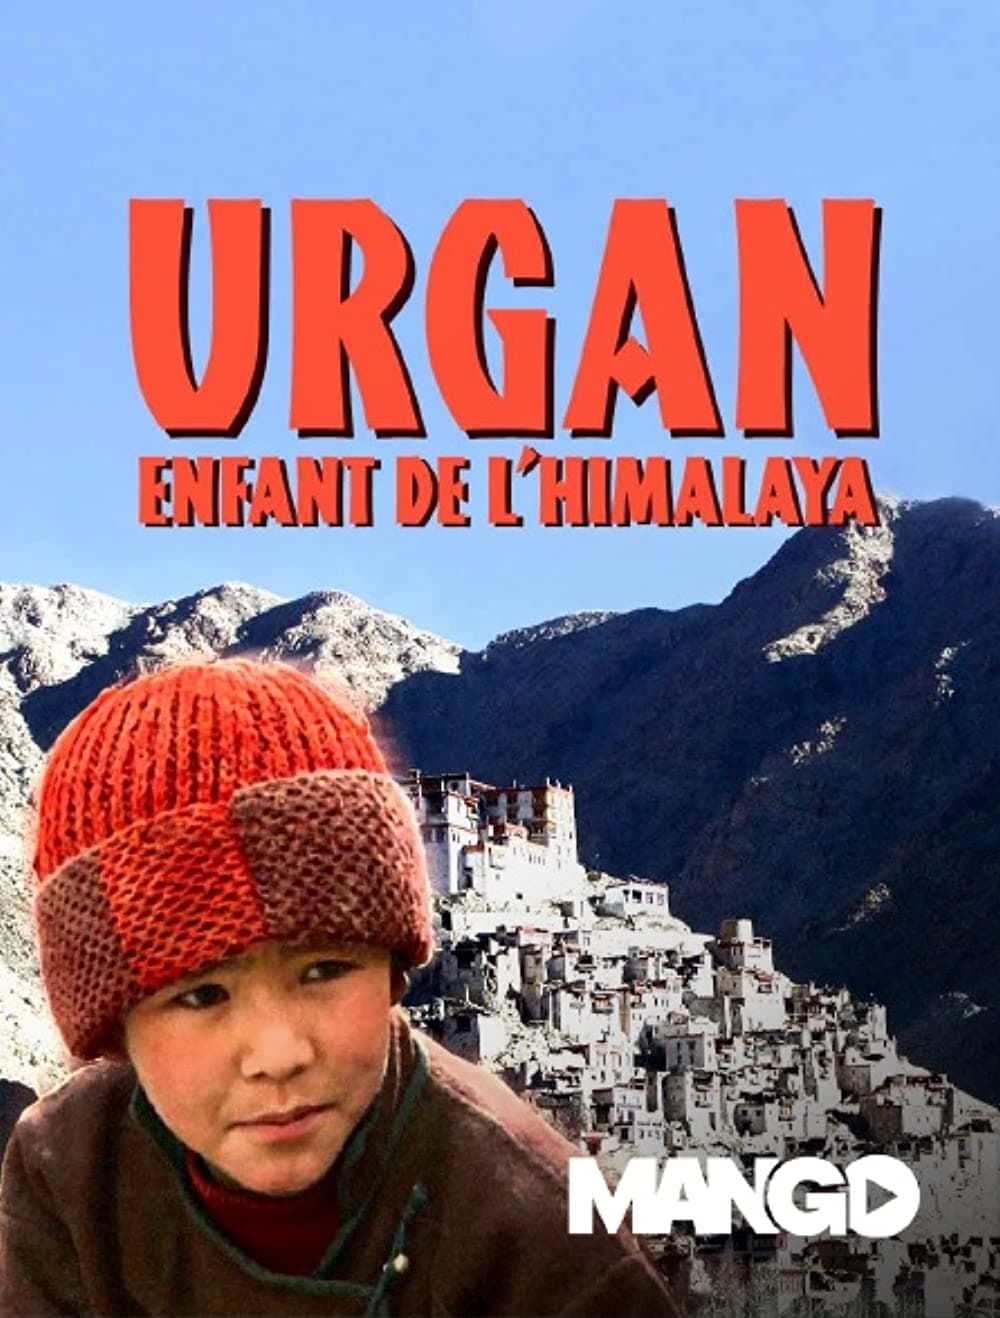 Urgan, Child of the Himalaya